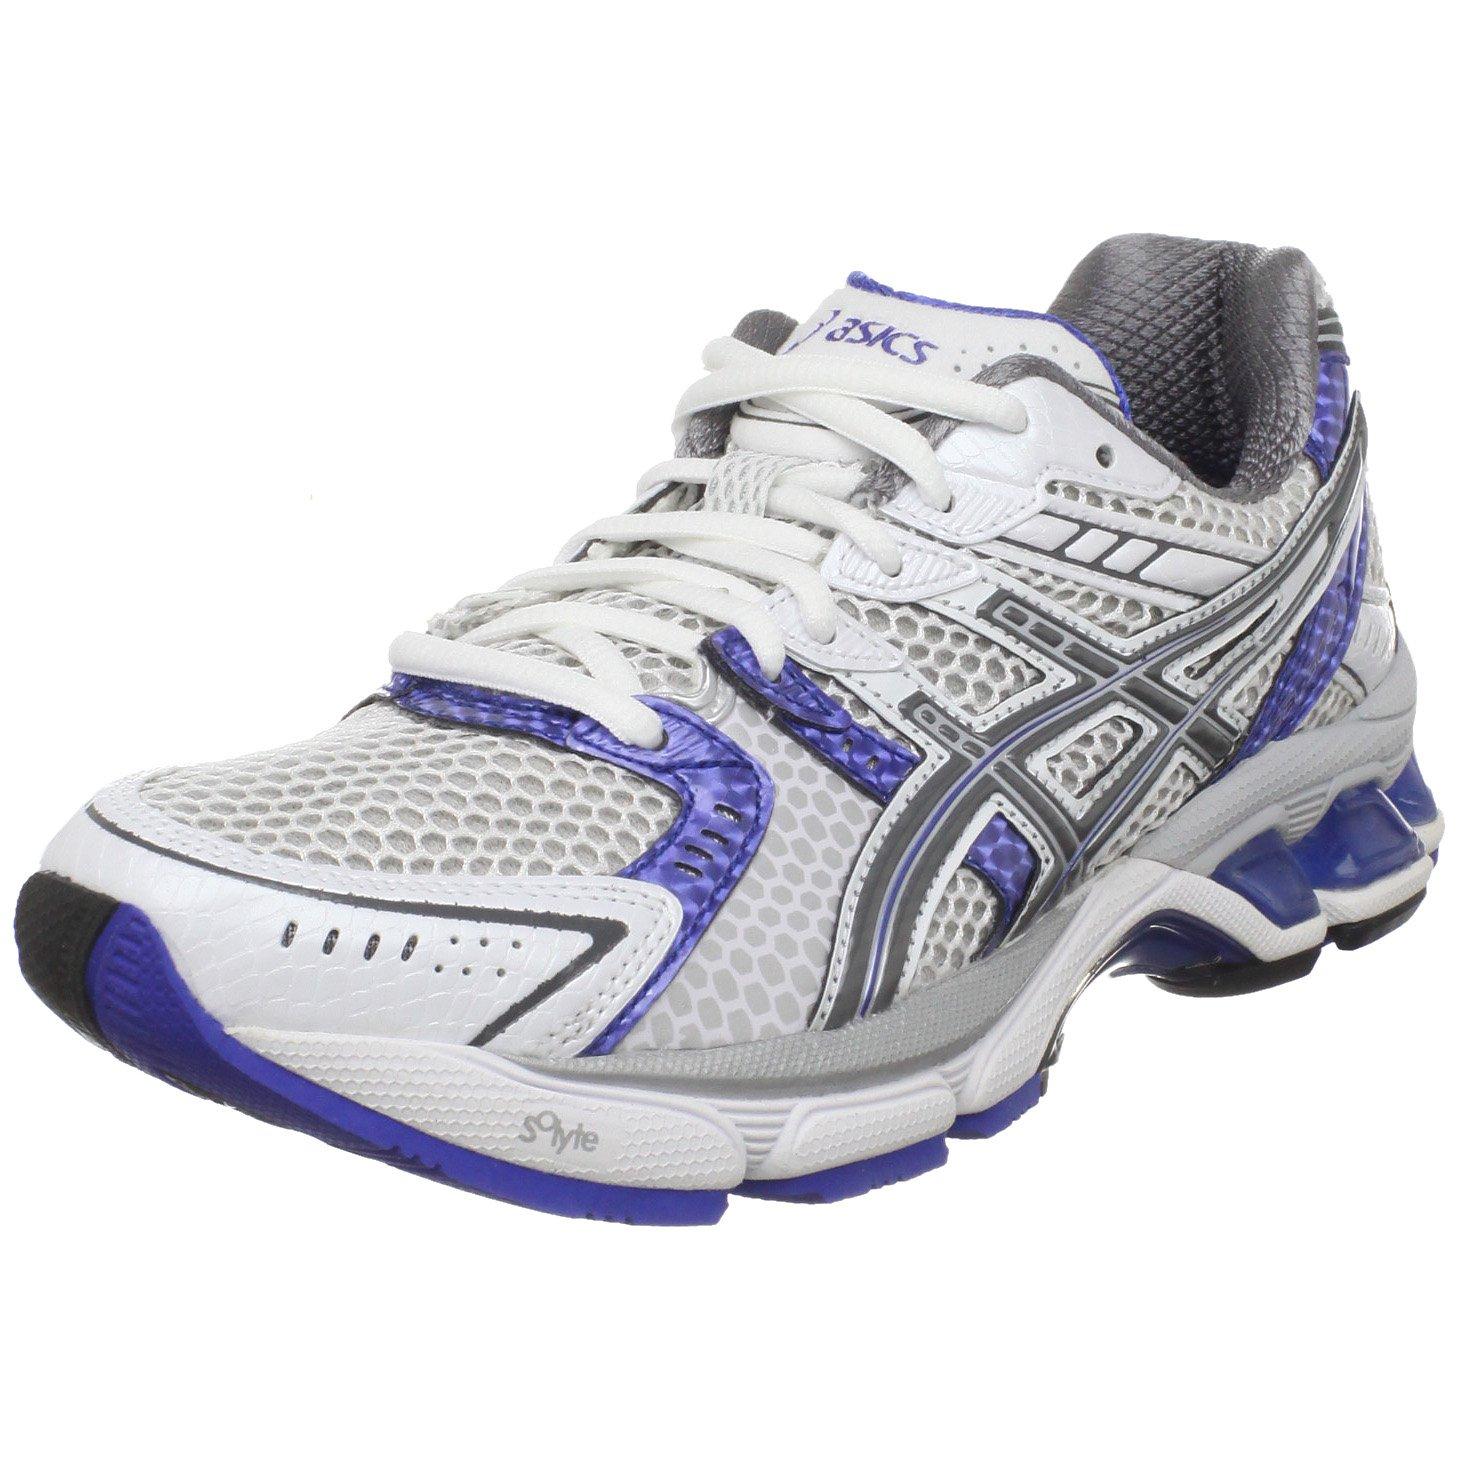 Asics Gel-3020 Running Shoe,white/titanium/blue Iris,6.5 D Us - Save 8% |  Lyst